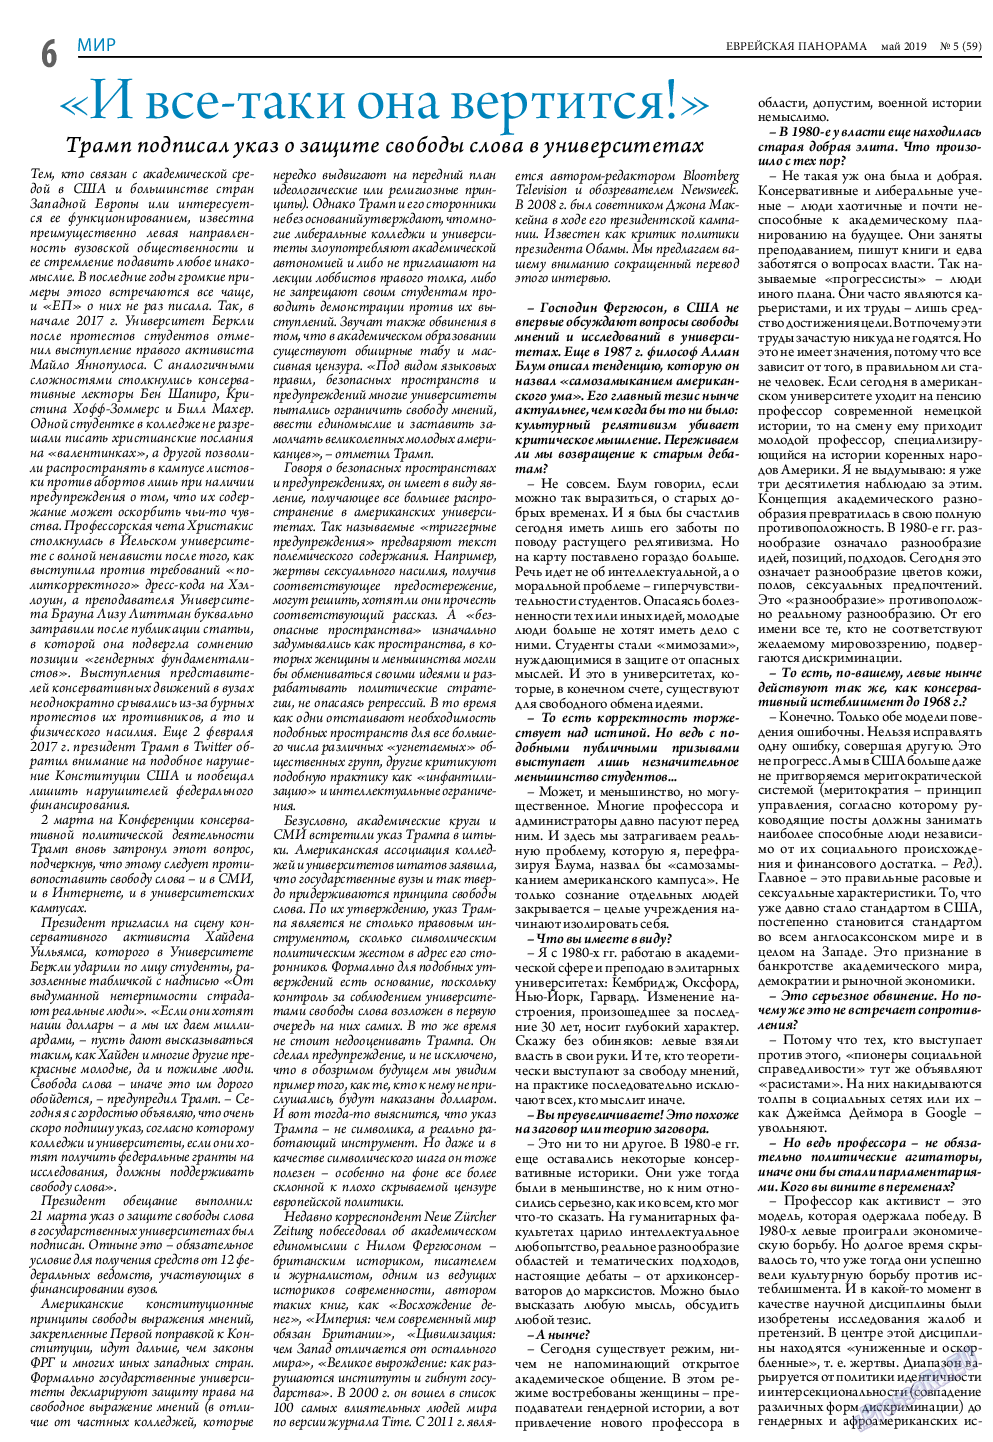 Еврейская панорама, газета. 2019 №5 стр.6